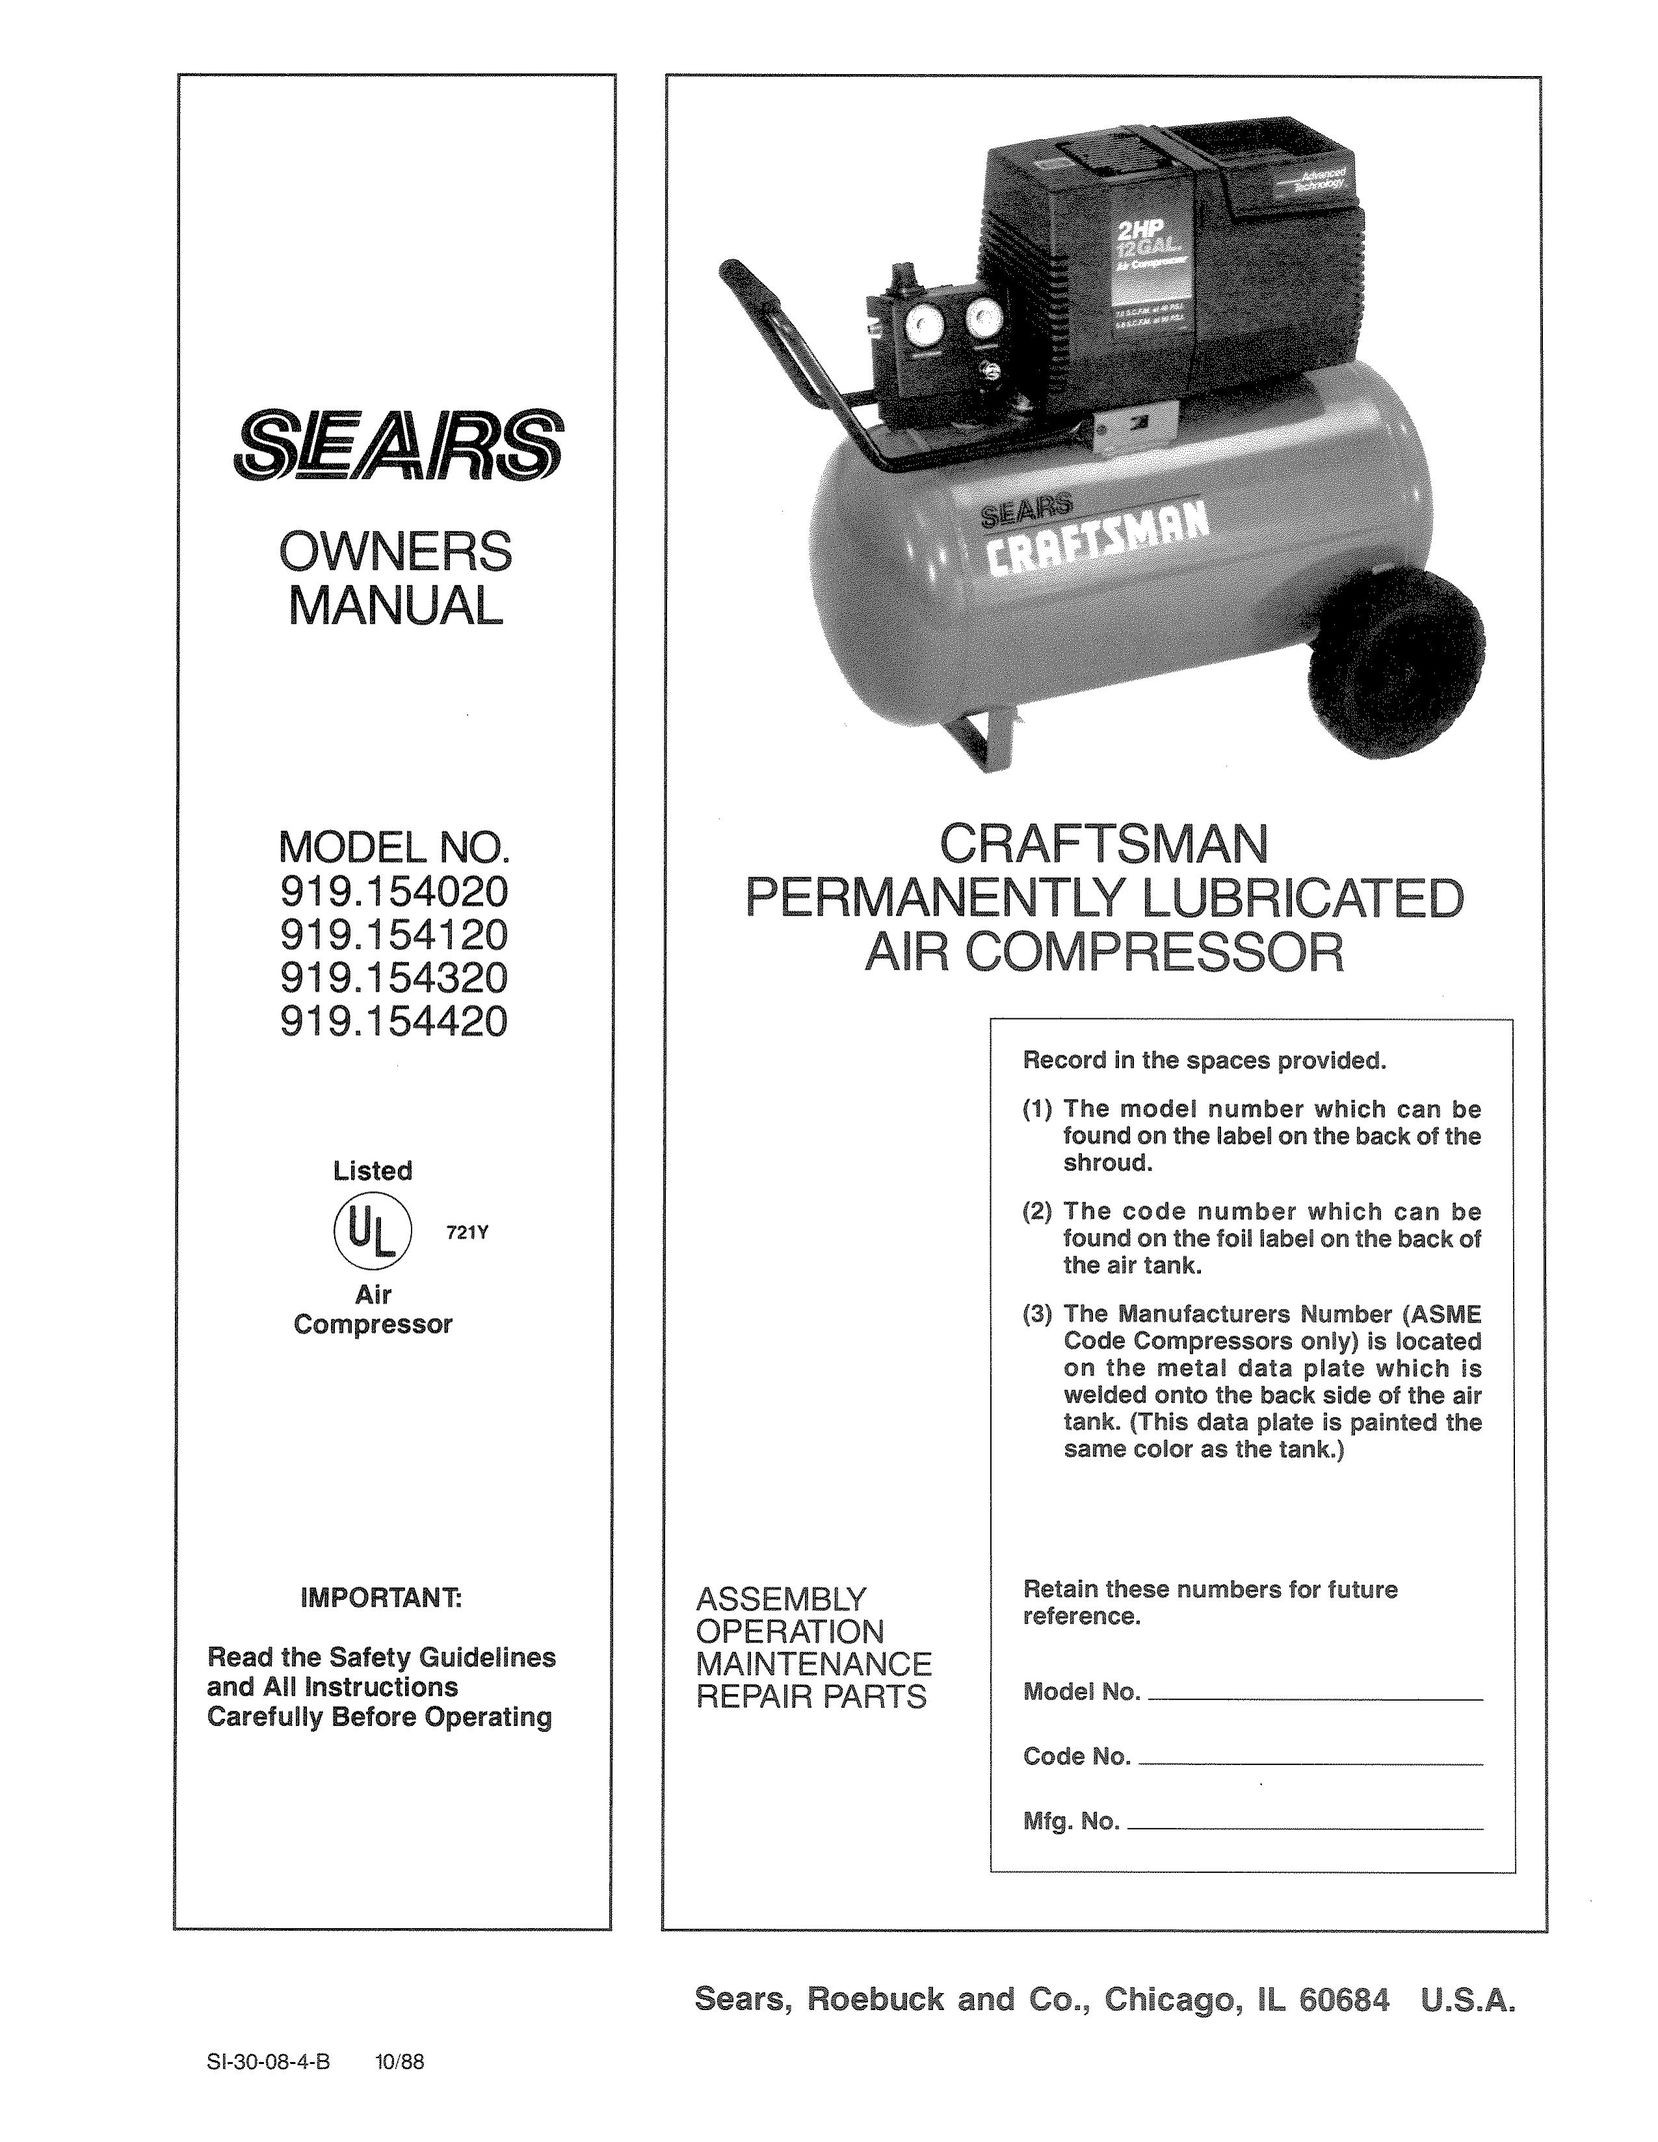 Sears 919.154320 Air Compressor User Manual